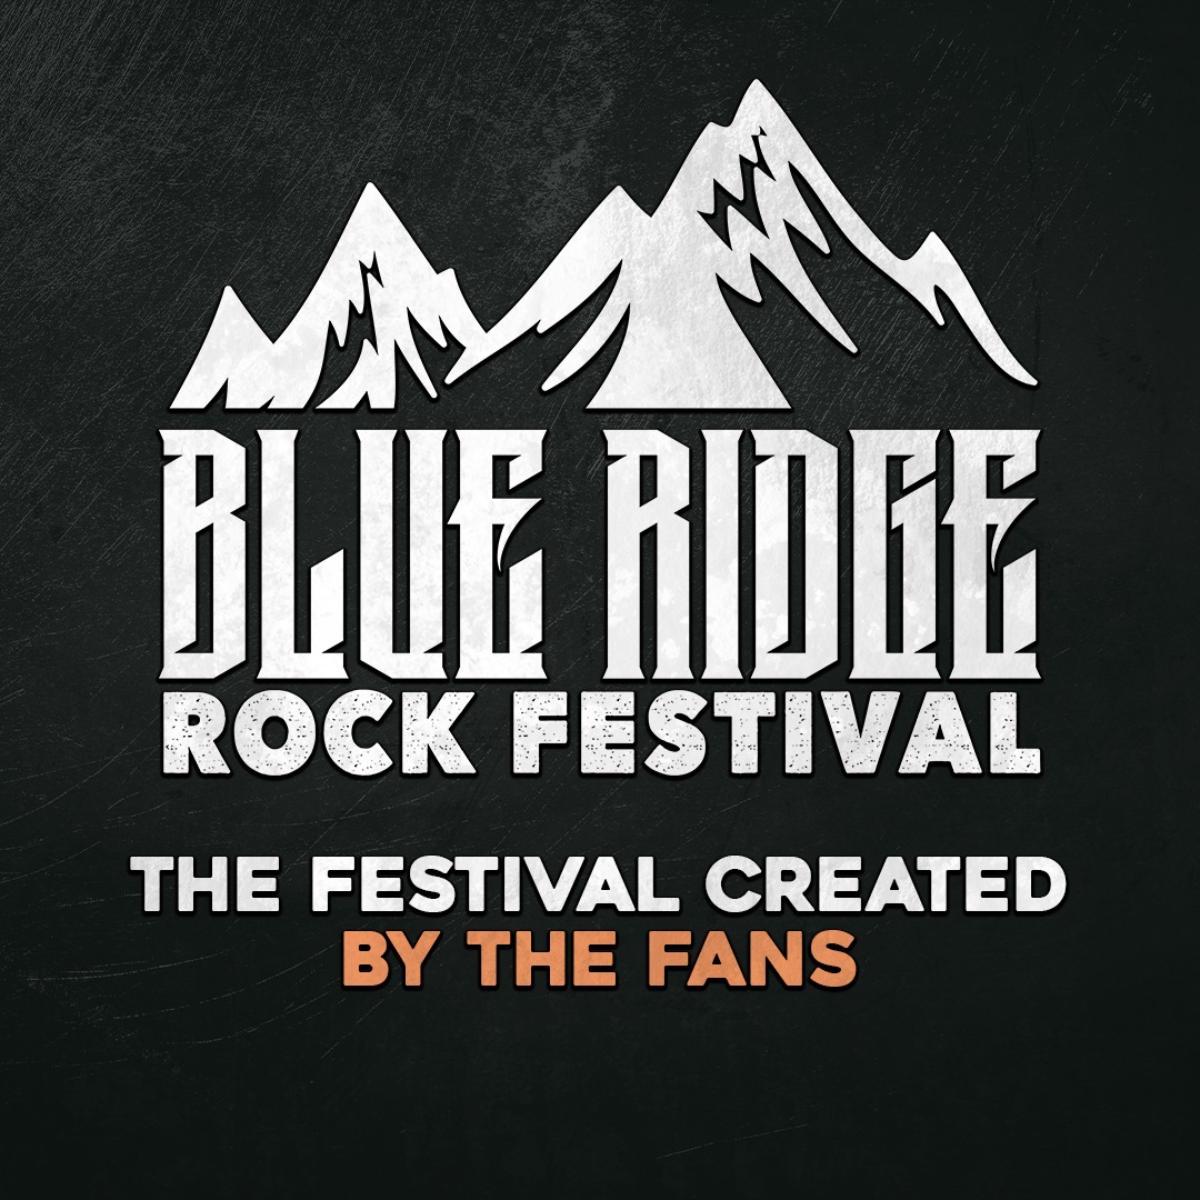 Blue Ridge Rock Festival Festival Lineup Dates And Location Viberate Com